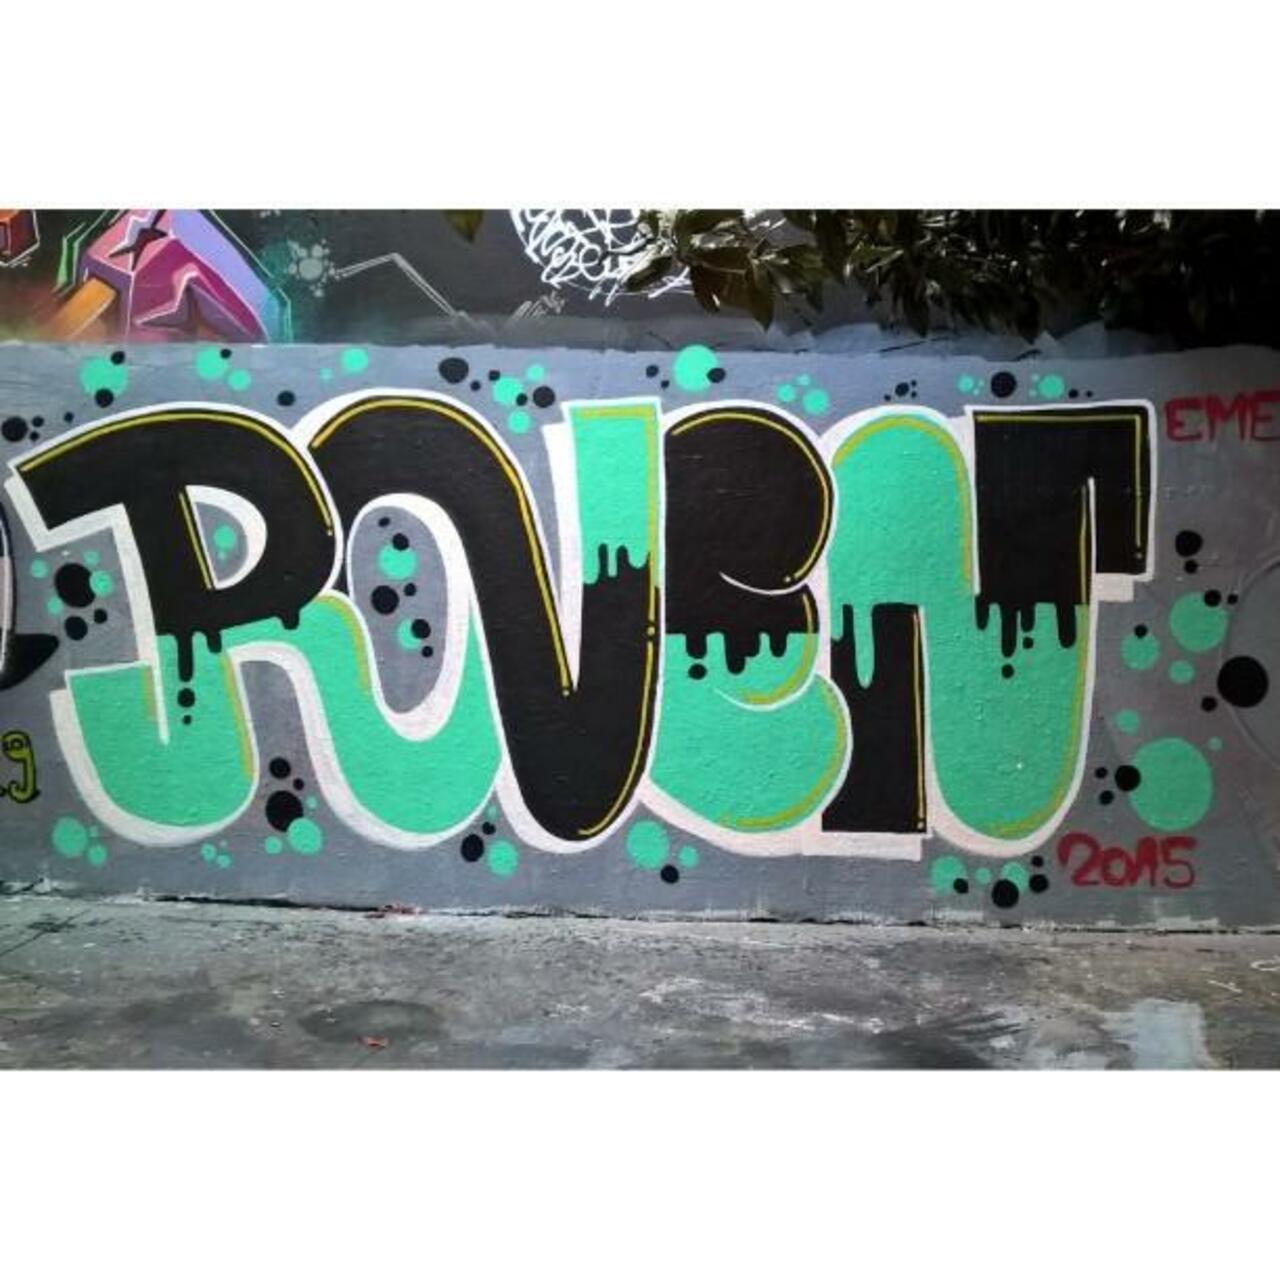 #streetart #graffiti #graff #art #fatcap #bombing #sprayart #spraycanart #wallart #handstyle #lettering #urbanart #… http://t.co/jQN76HKyYN